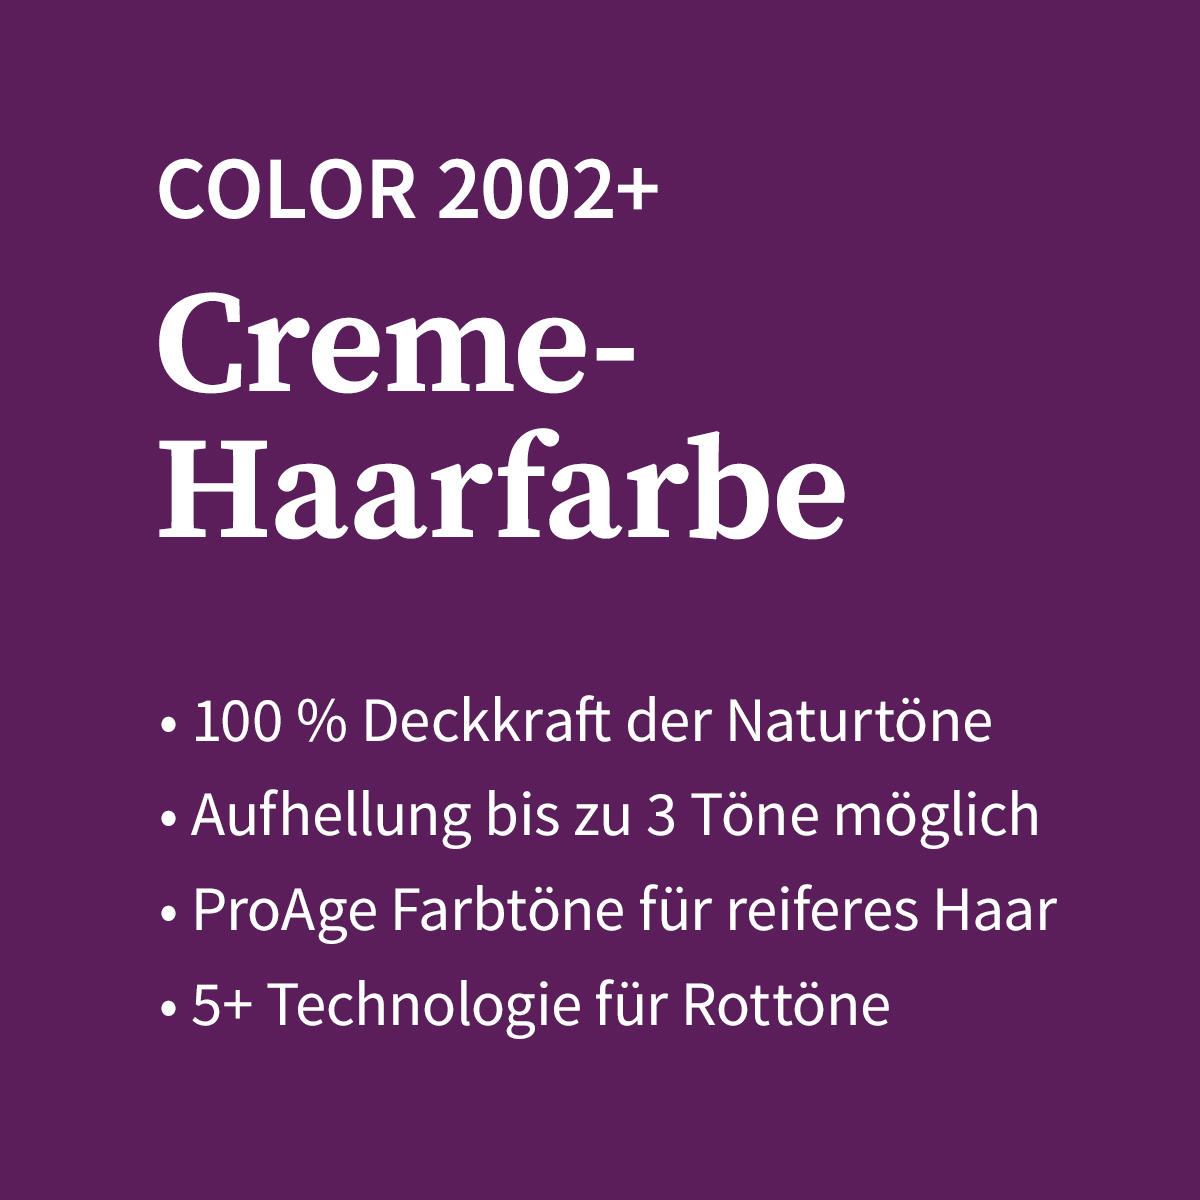 Basler Color 2002+ Cremehaarfarbe 6/55 dunkelblond mahagoni intensiv, Tube 60 ml - 4